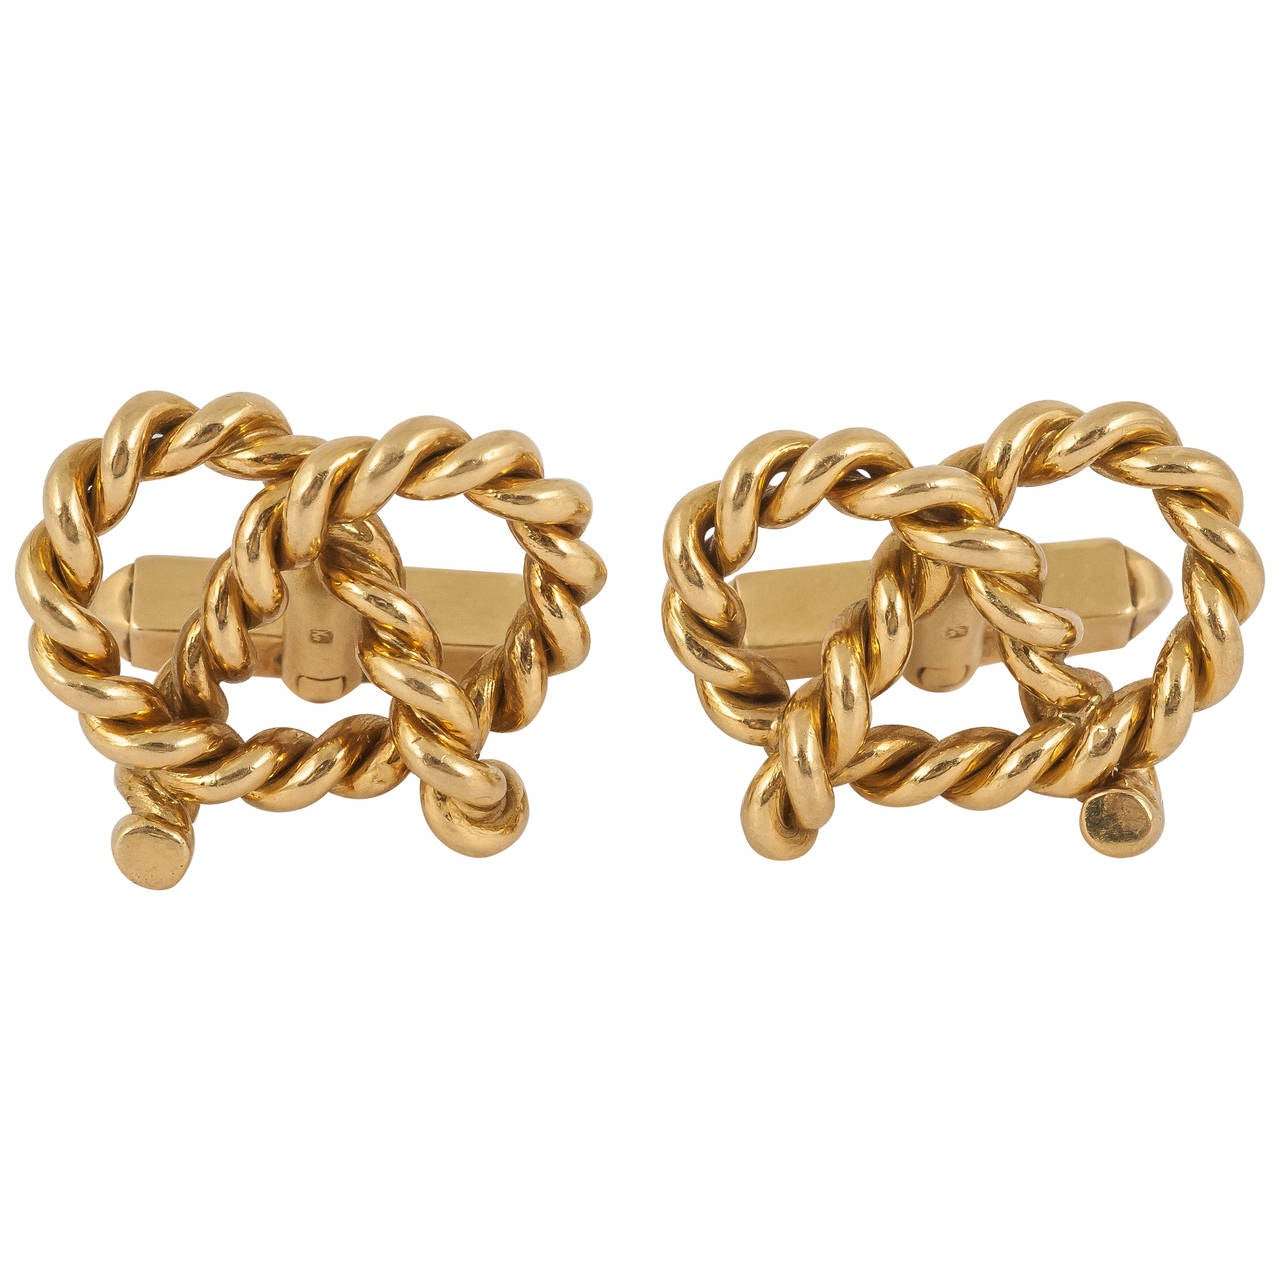 Kutchinsky Gold Rope Knot Cufflinks